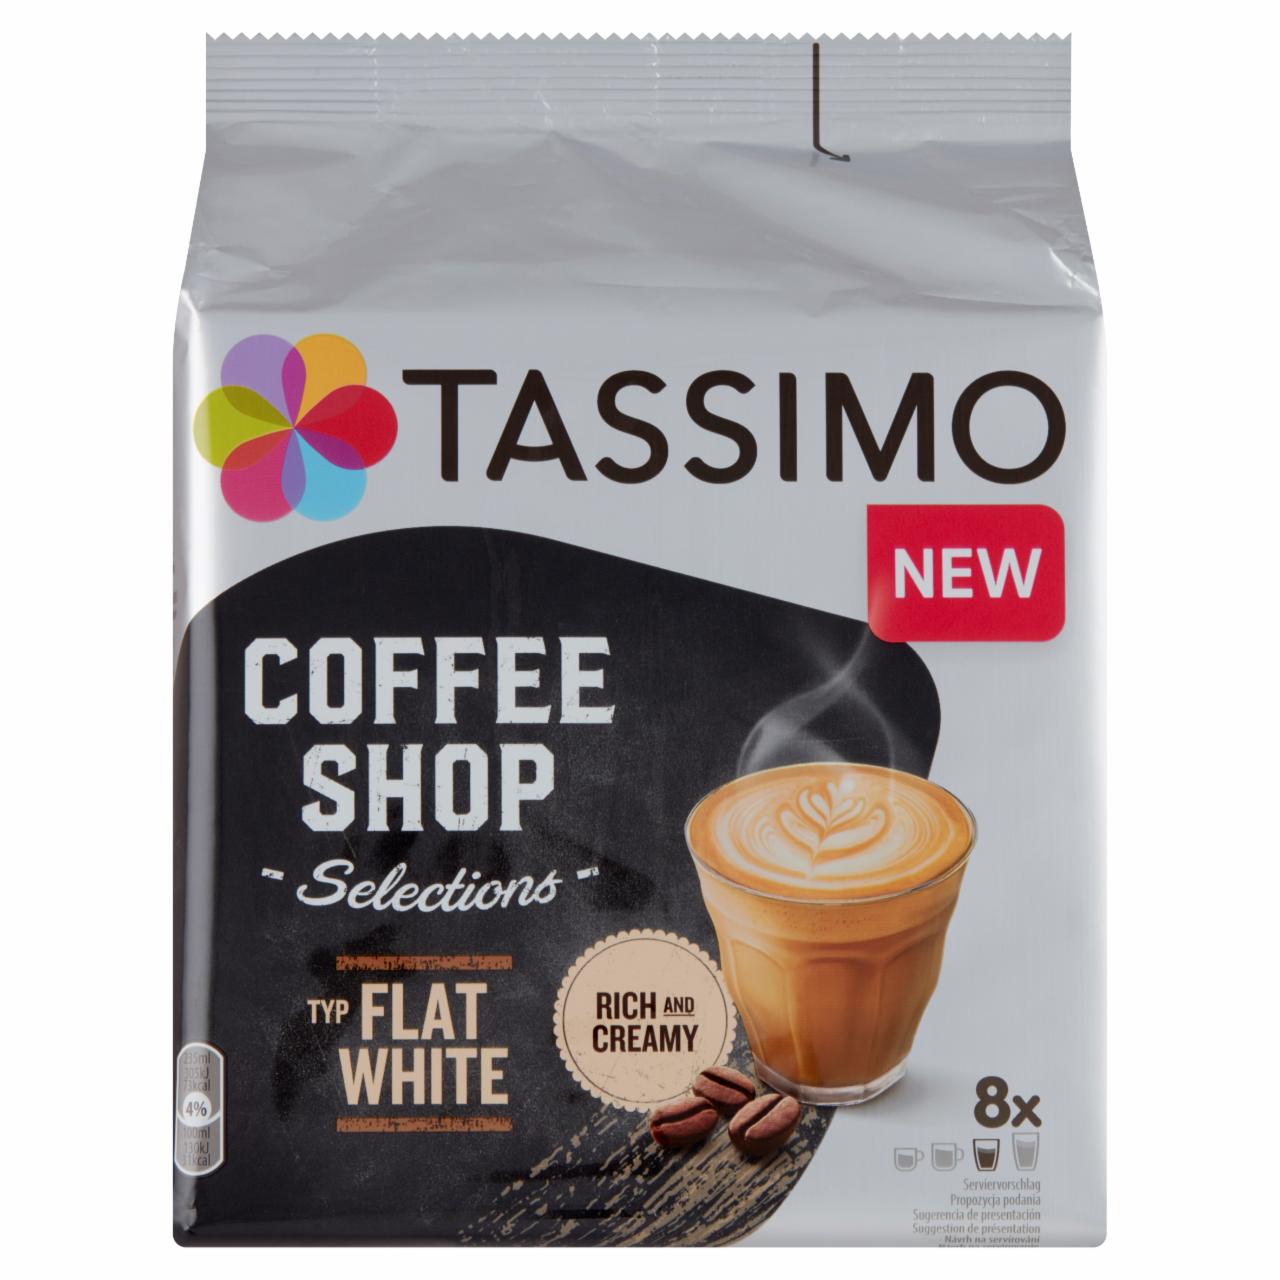 Zdjęcia - Tassimo Coffee Shop Selections Flat White Kawa mielona 8 sztuk i śmietanka 8 sztuk 220 g